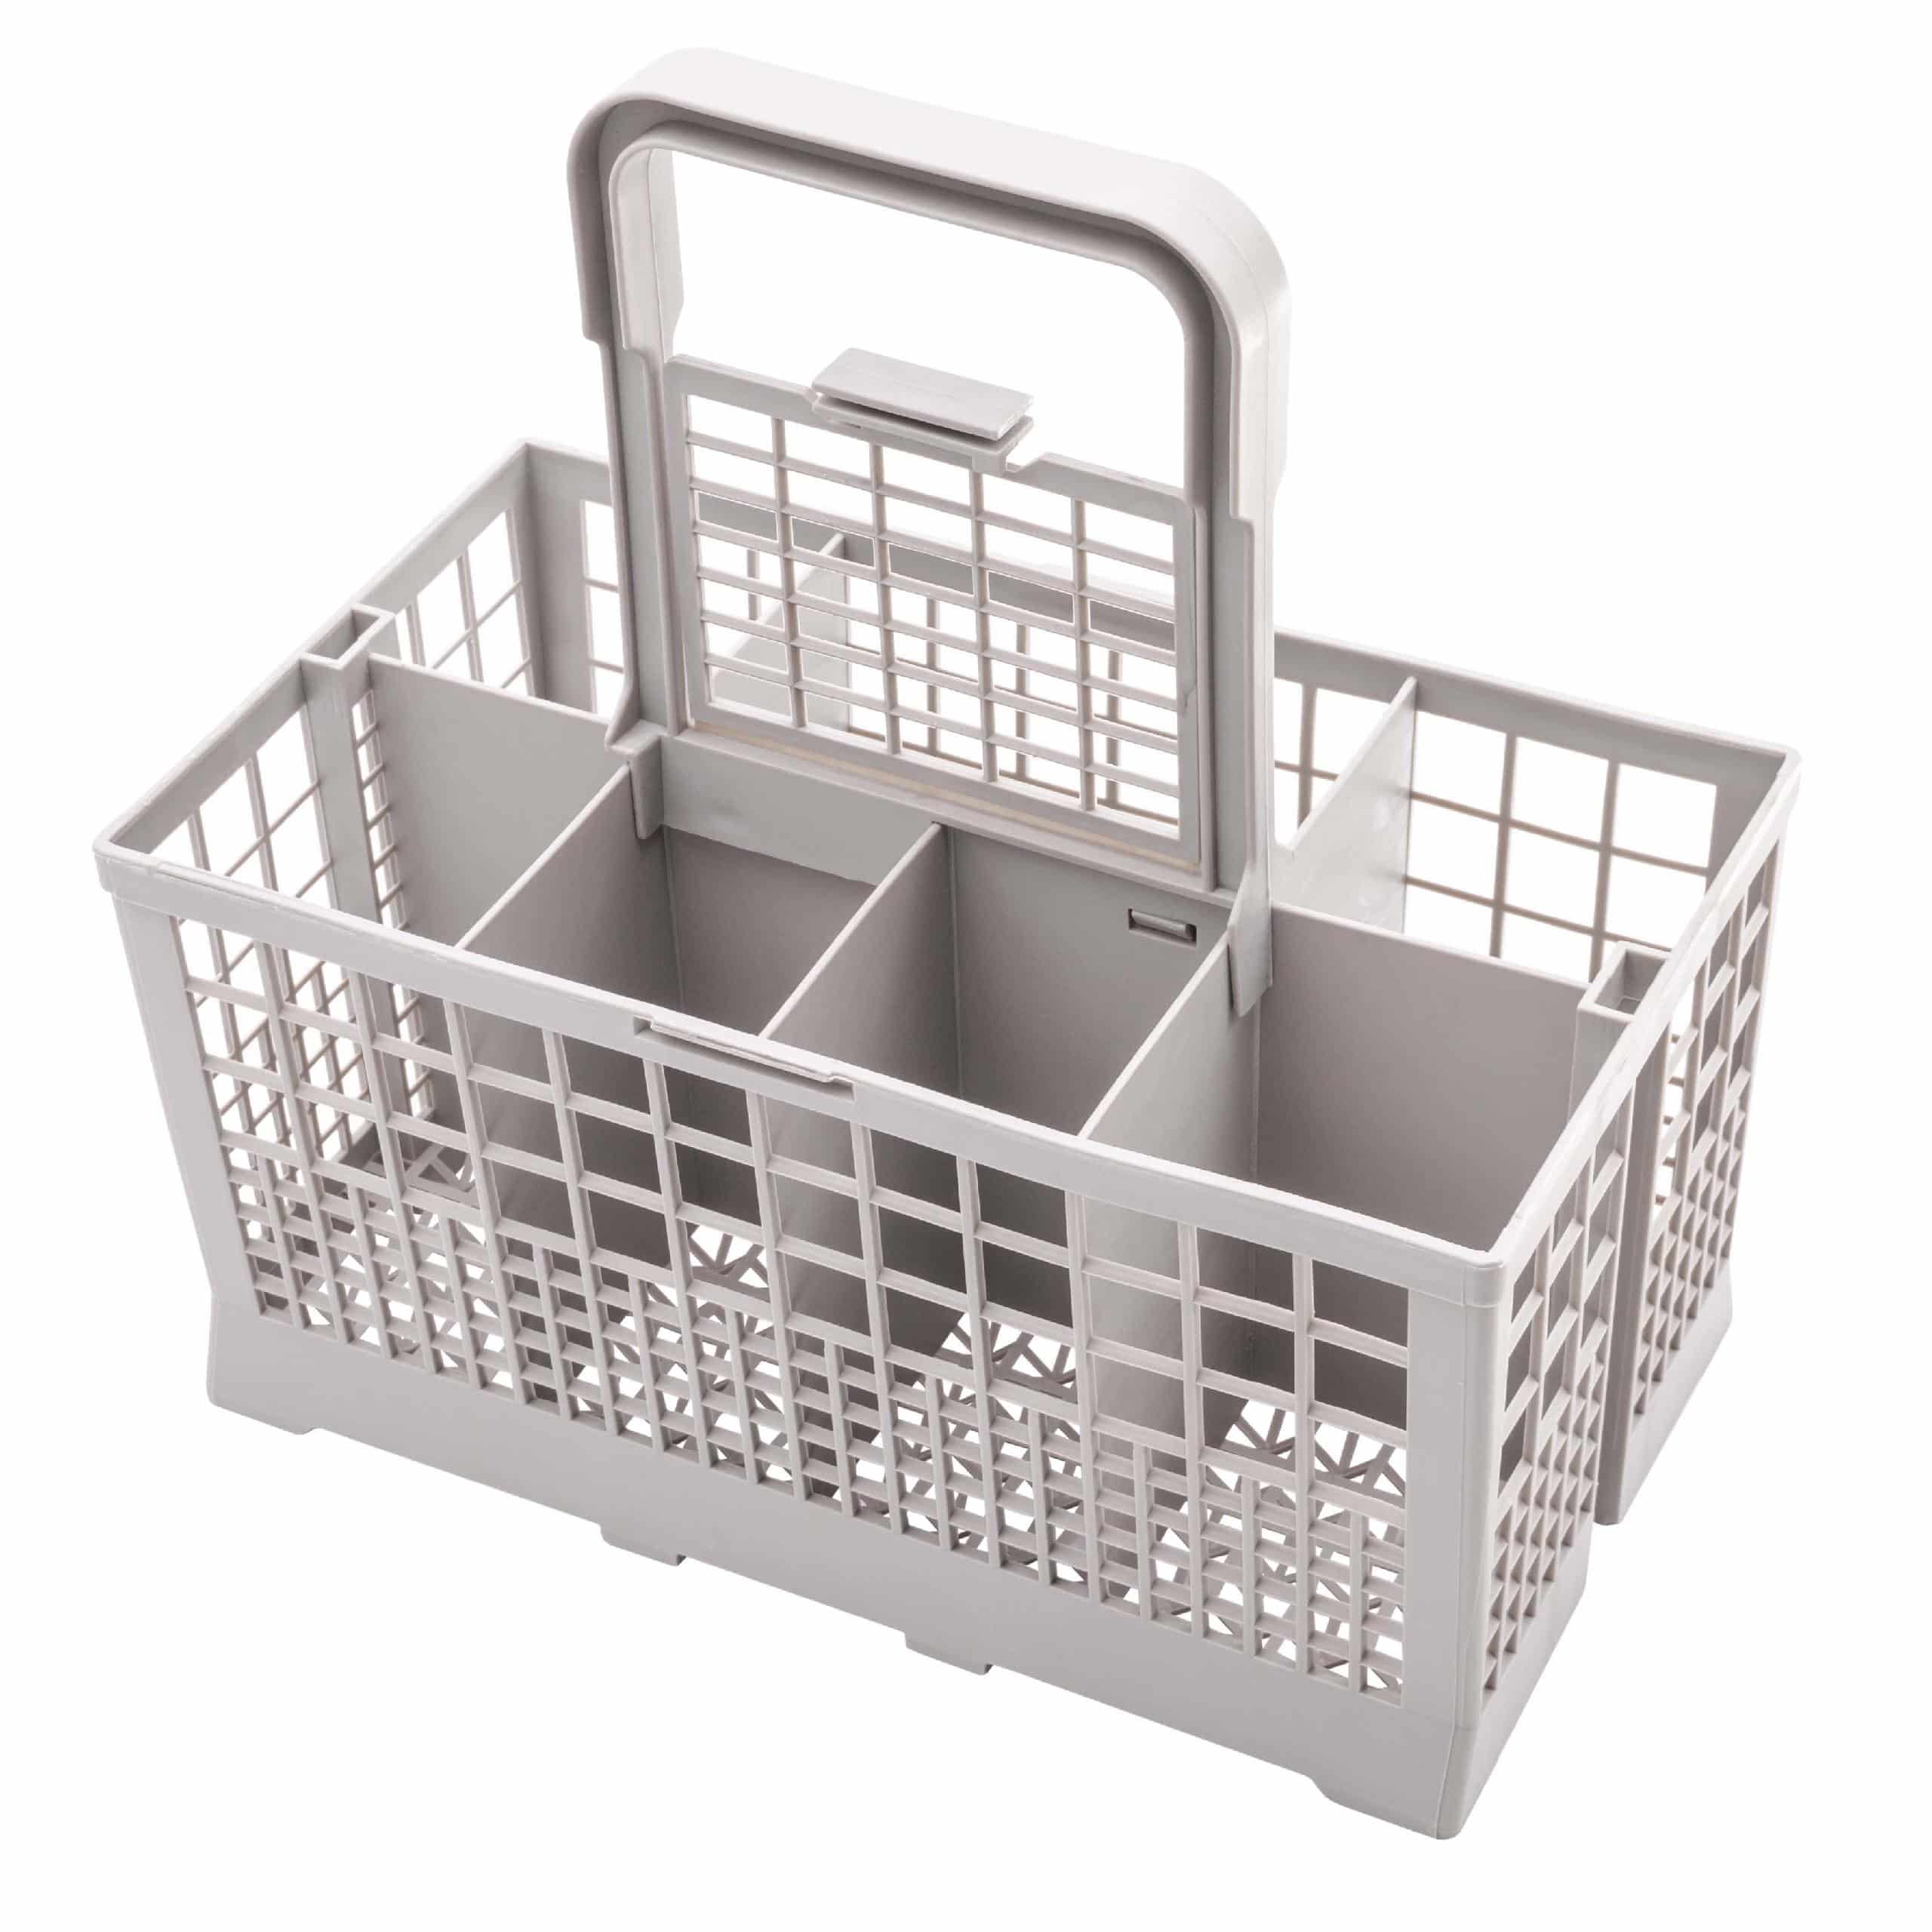 vhbw Cutlery Basket for DeDietrich VG7641D12 Dishwashers - With Handle Grey